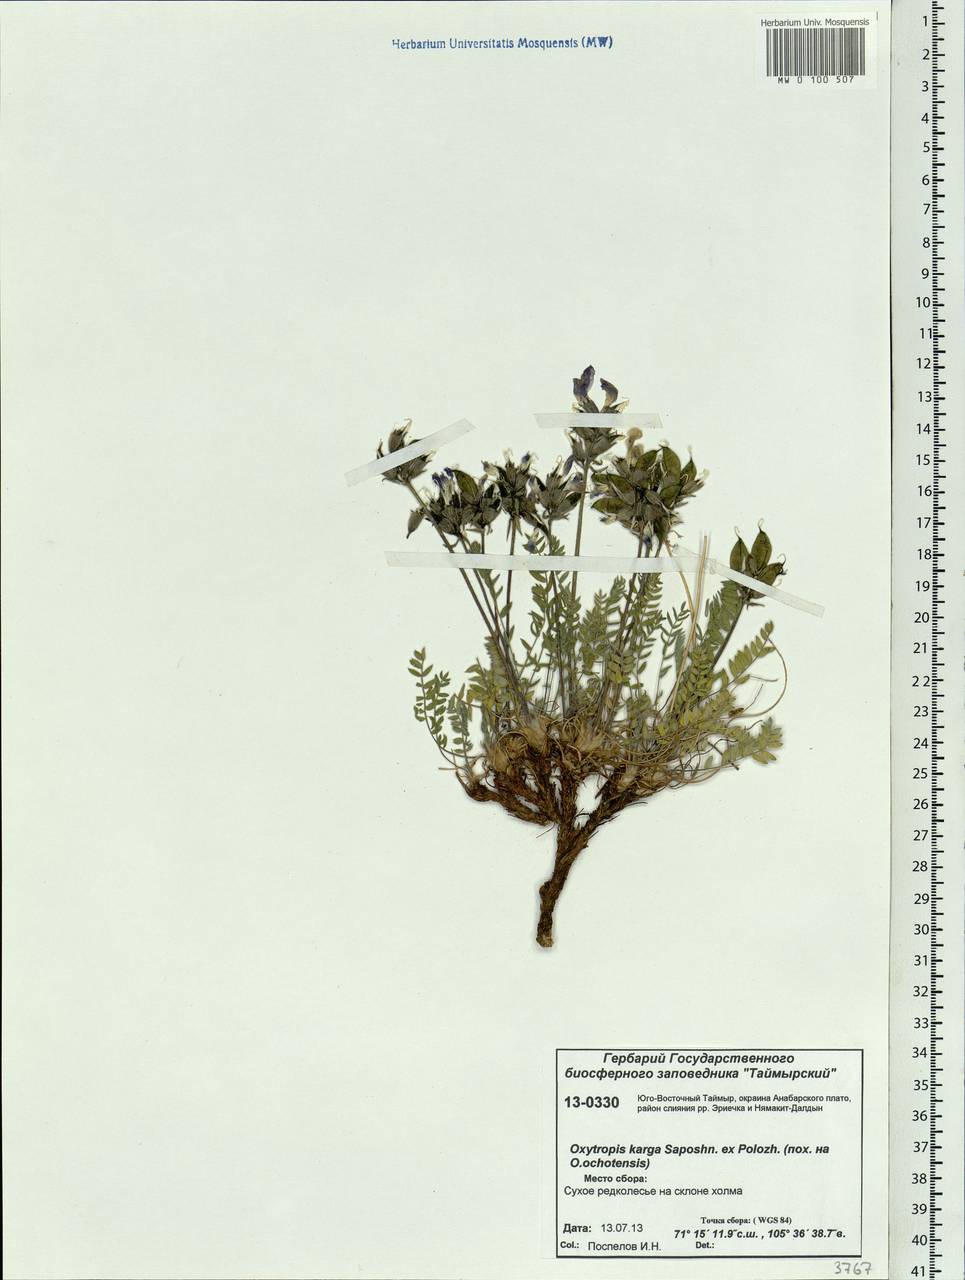 Oxytropis arctica subsp. taimyrensis Jurtzev, Siberia, Central Siberia (S3) (Russia)